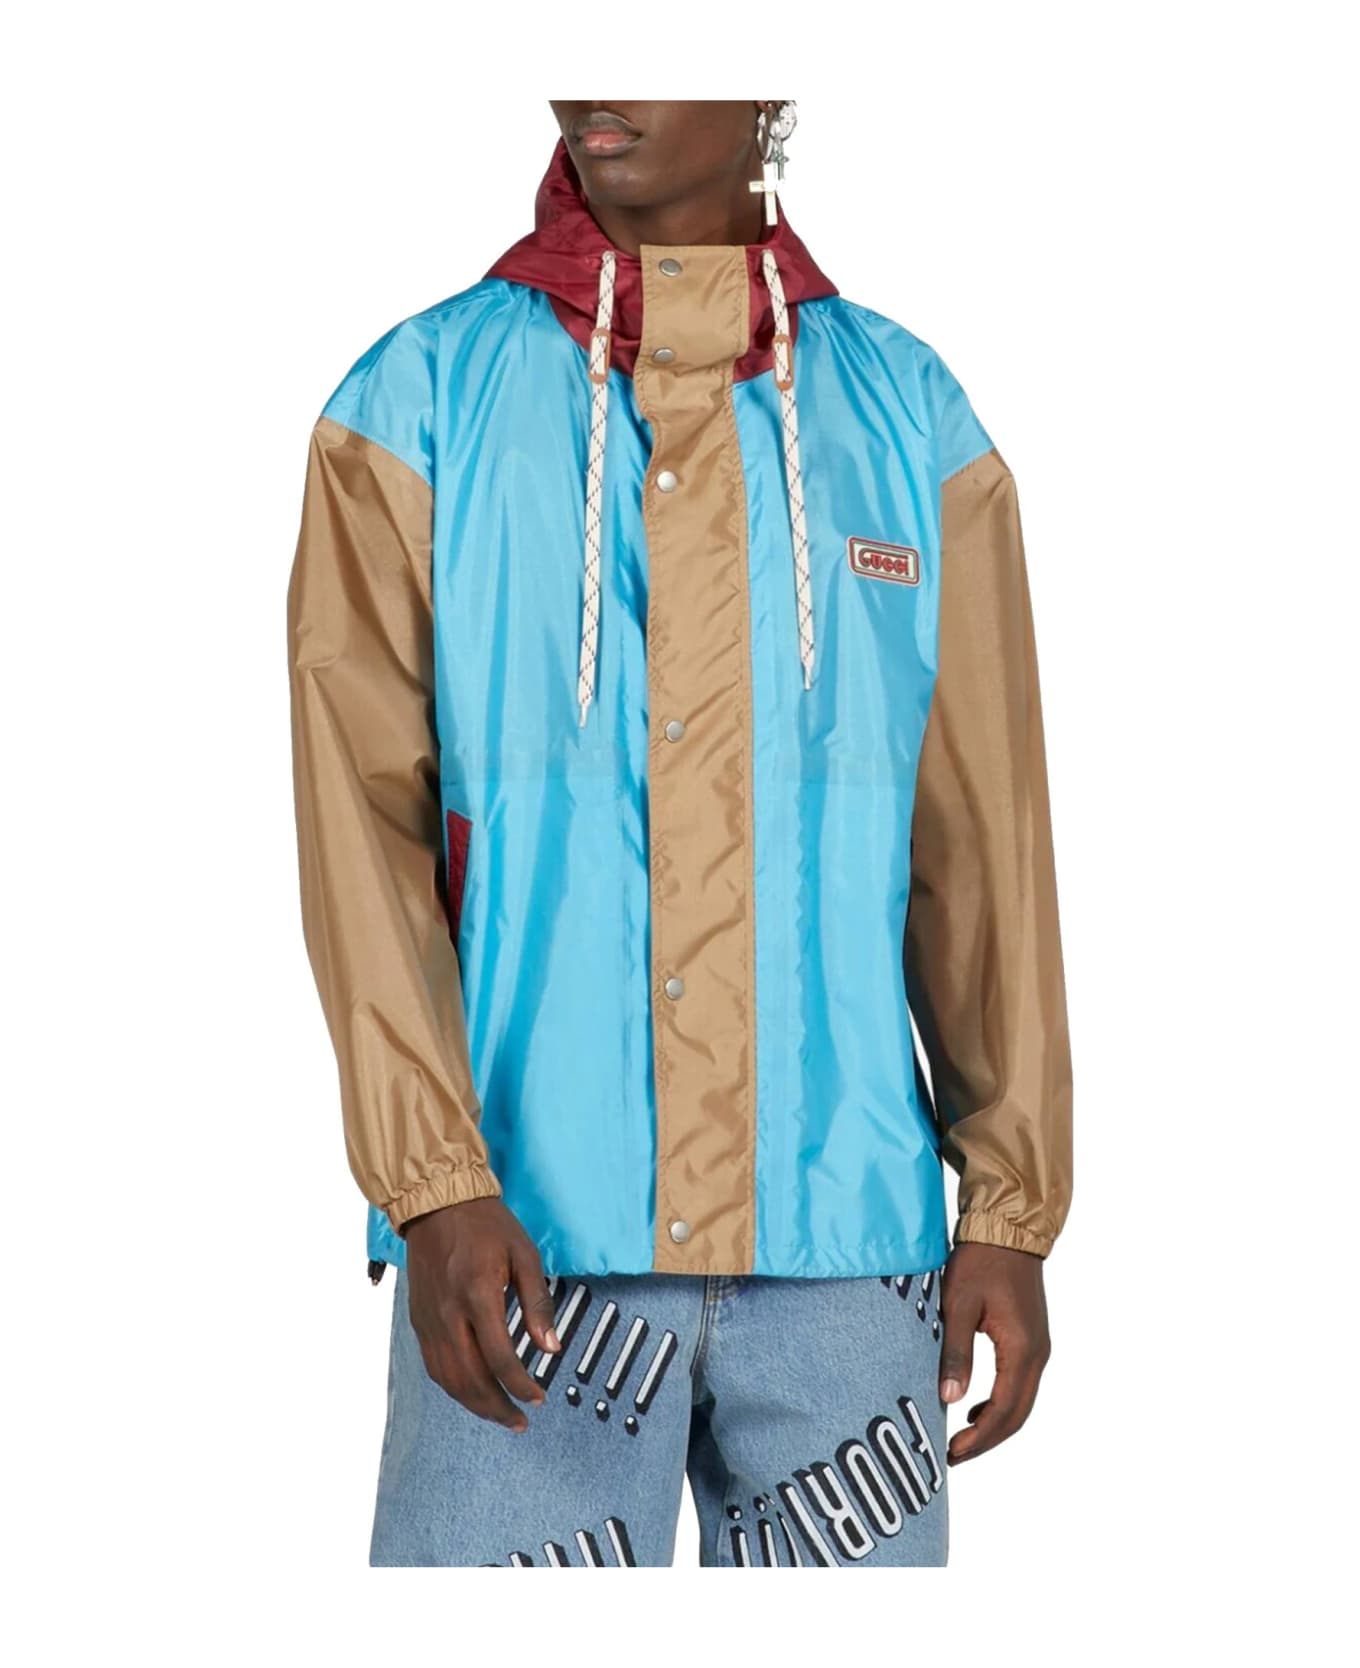 Gucci Hooded Lightweight Jacket - Multicolor ジャケット